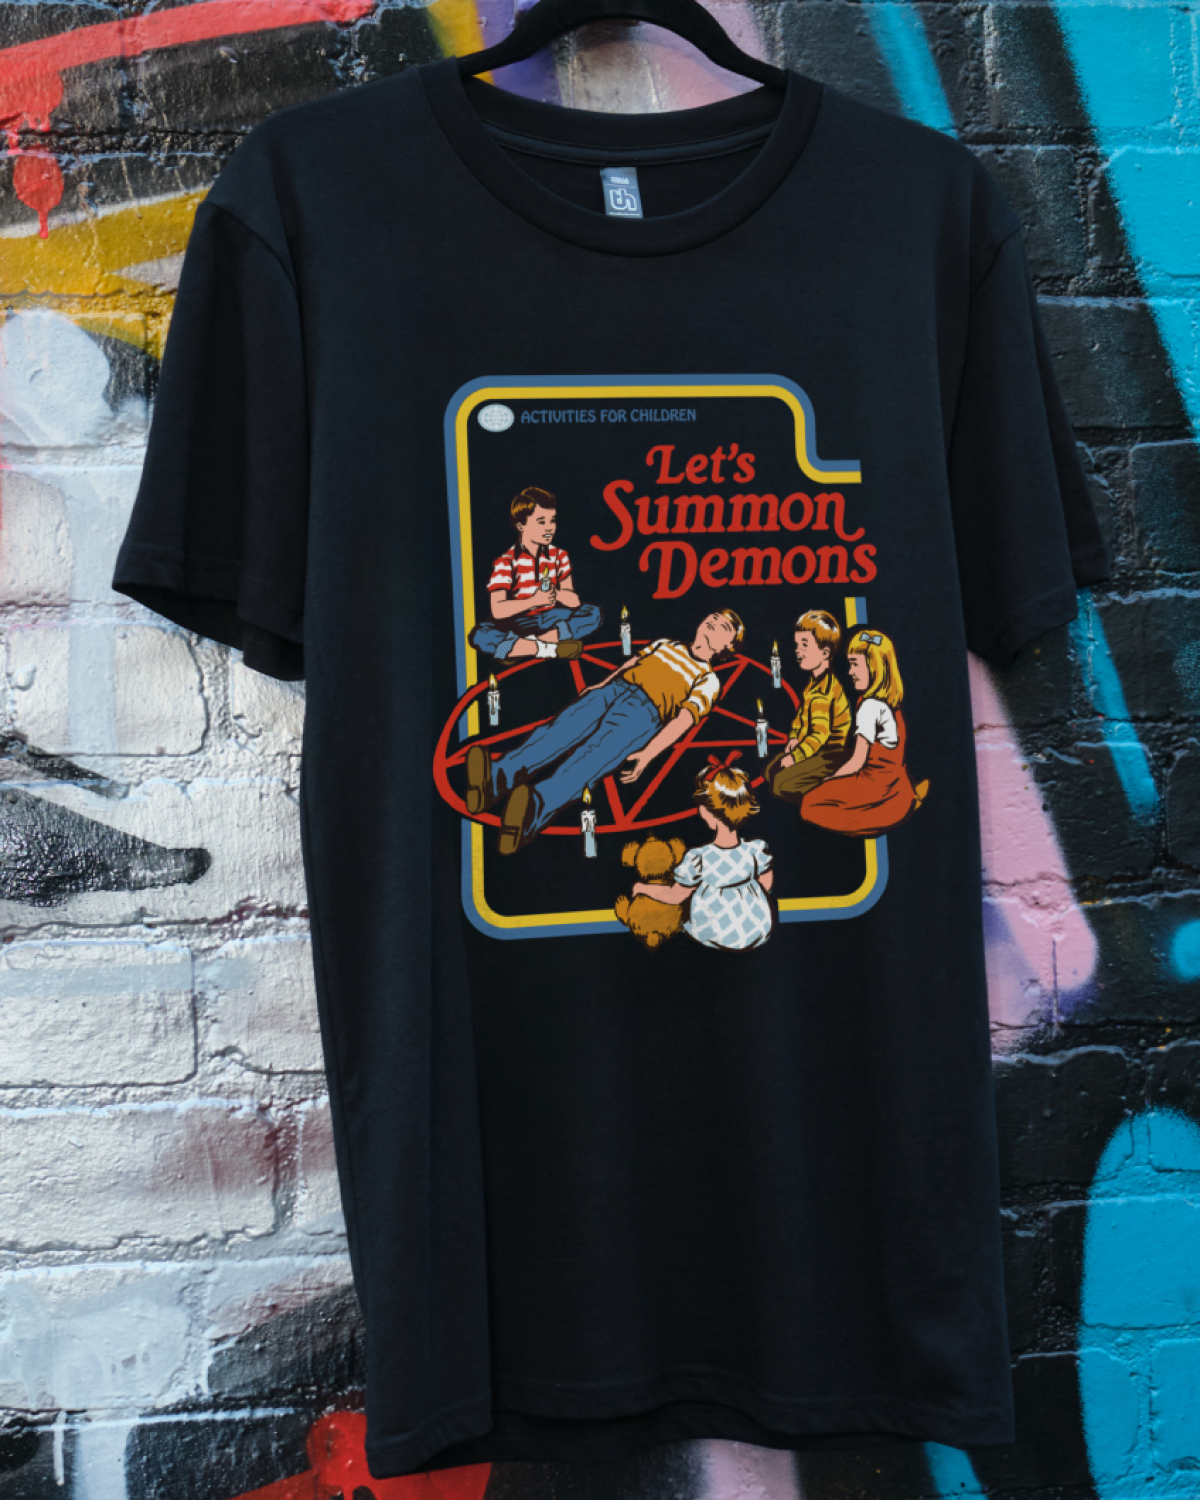  Let's Summon Demons T-Shirt Europe Online